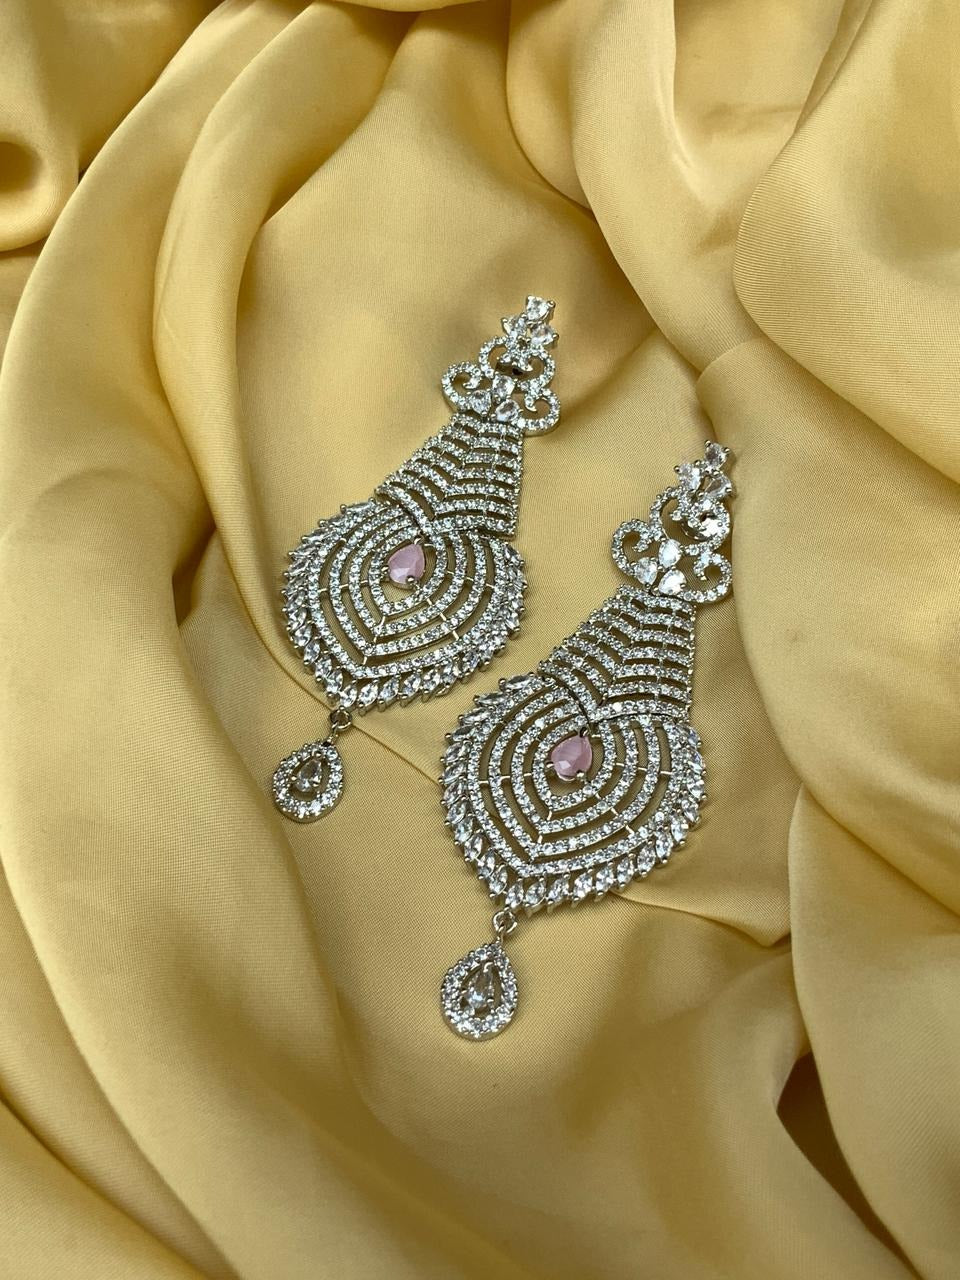 Sparkling Silver American Diamond Earrings